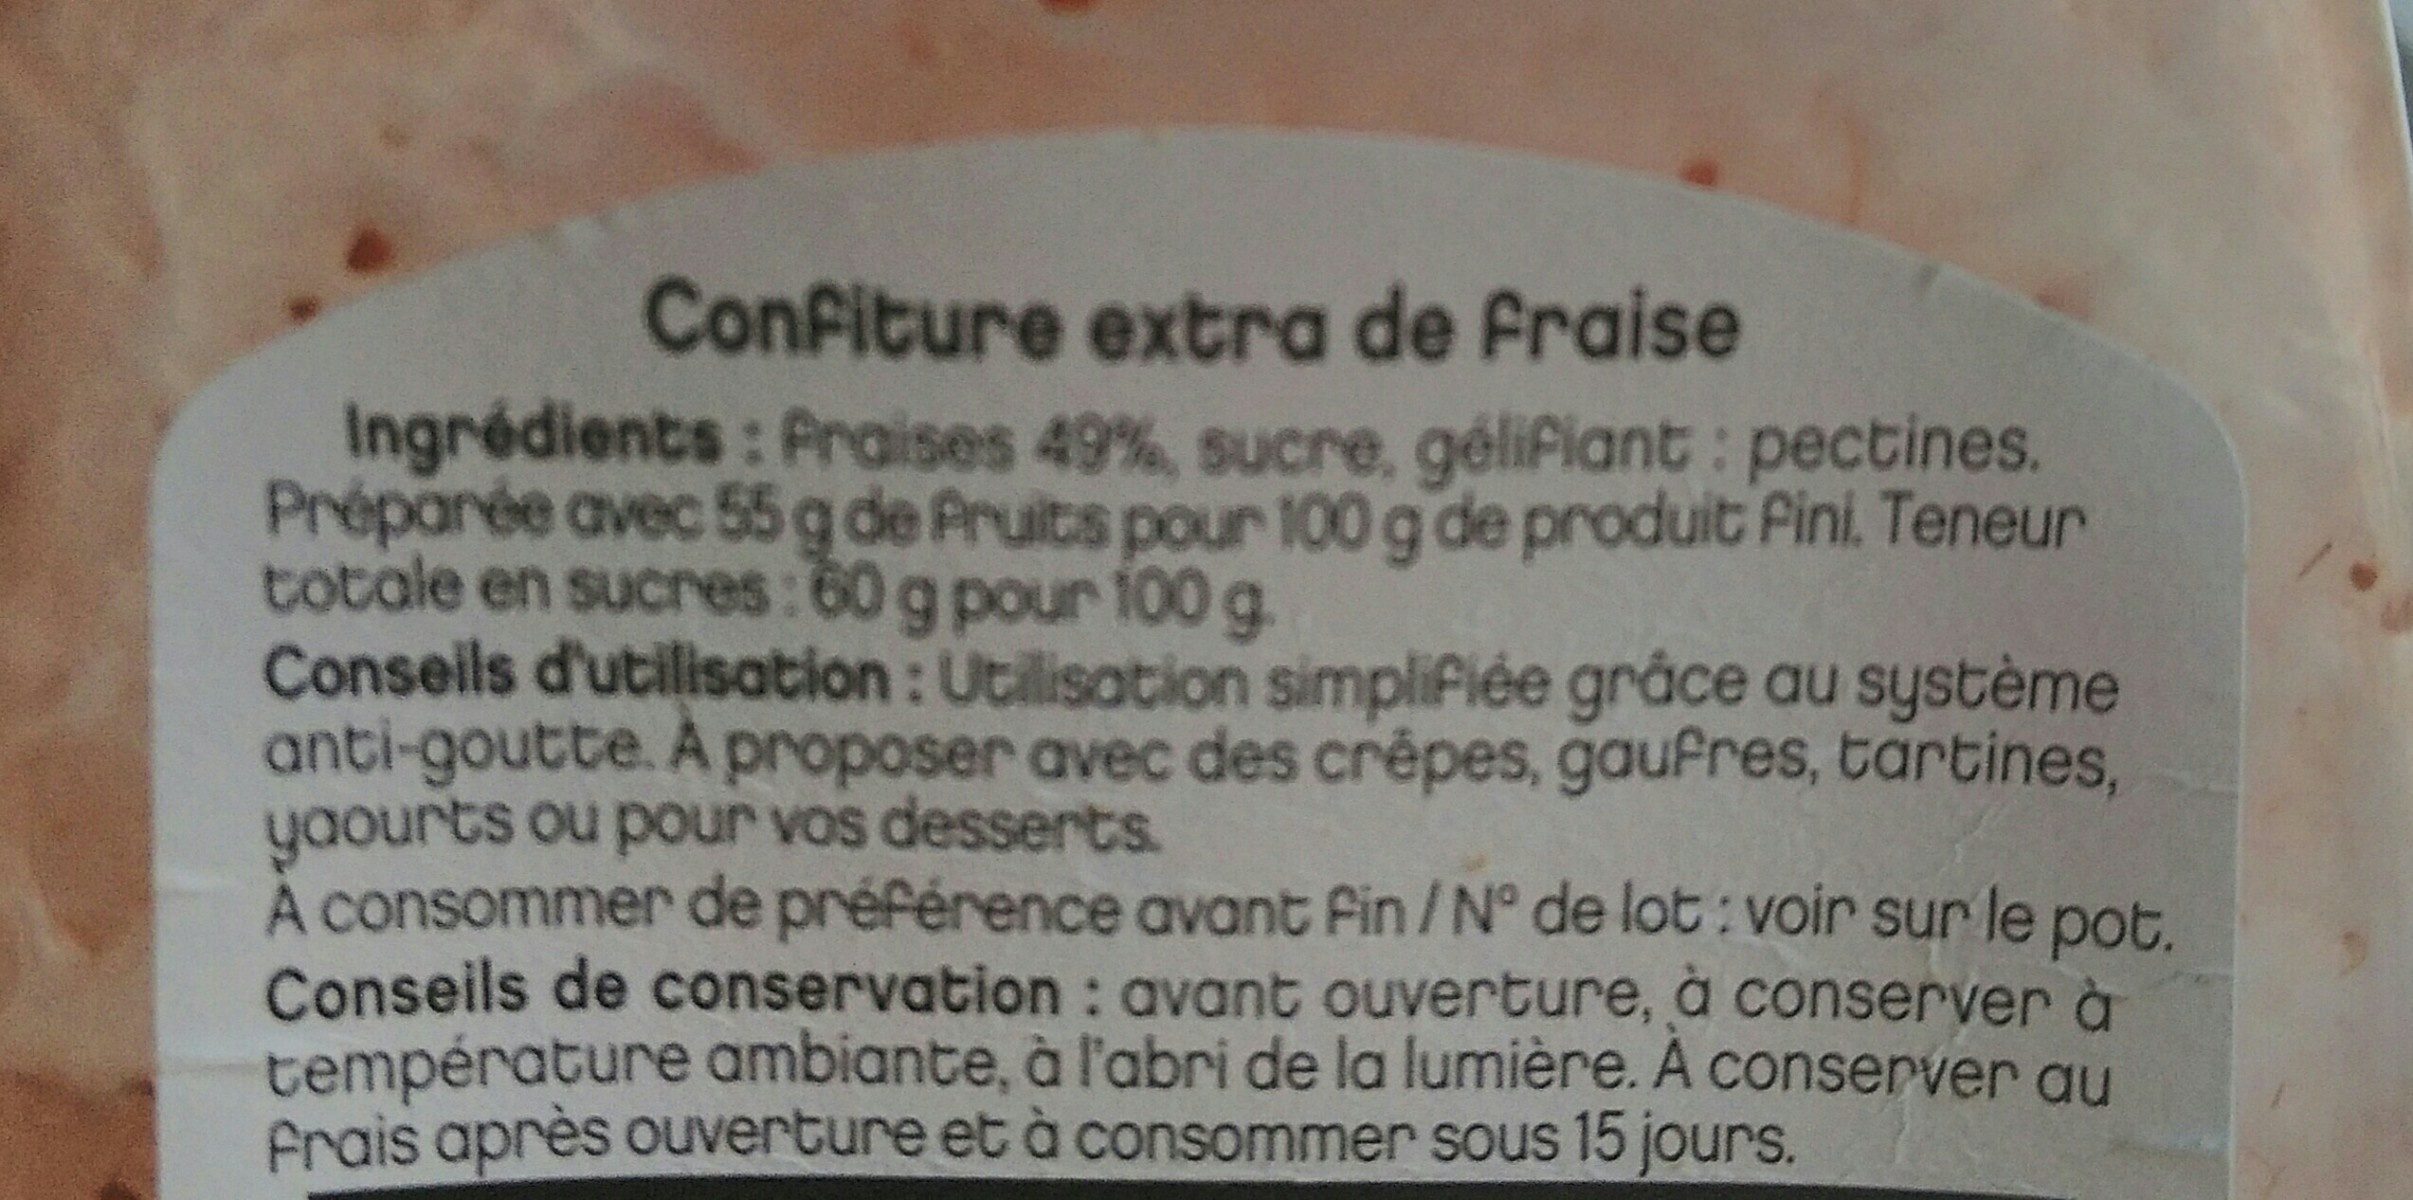 Confiture extra de Fraise - Ingredients - fr